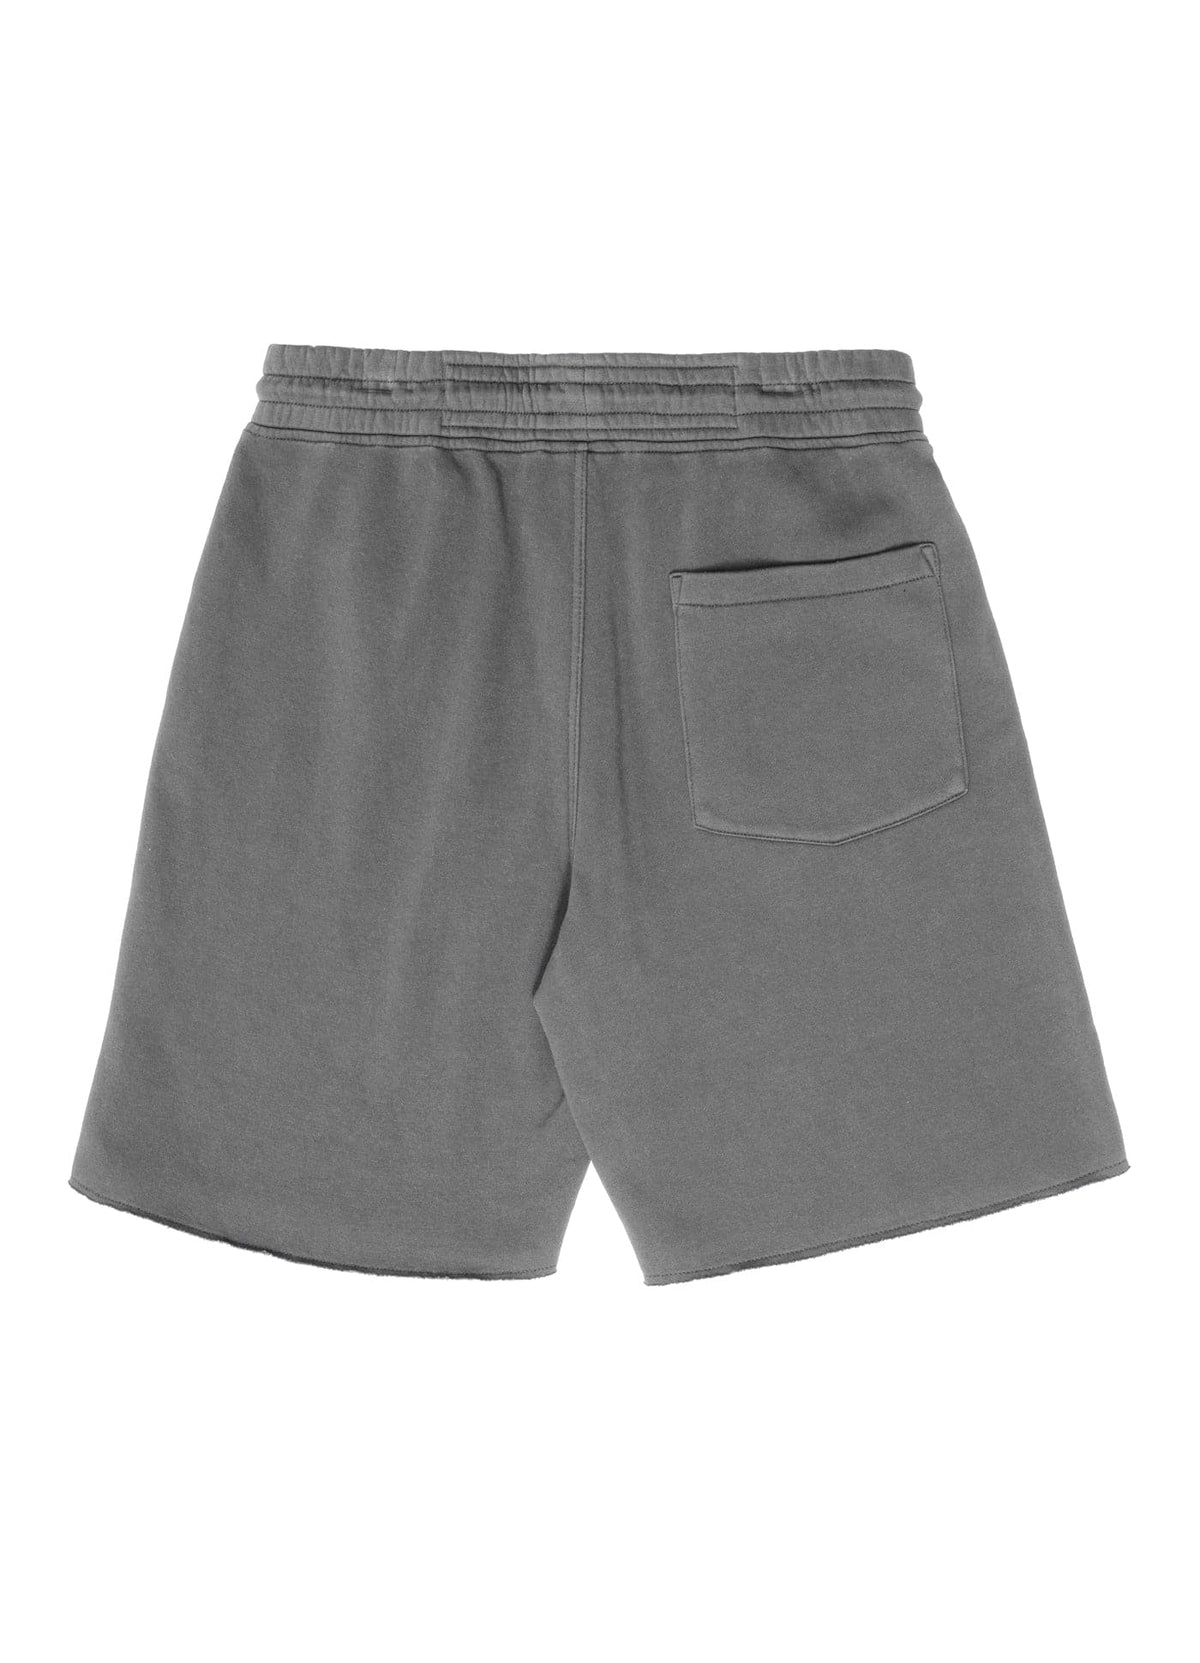 LANCASTER Grey Shorts